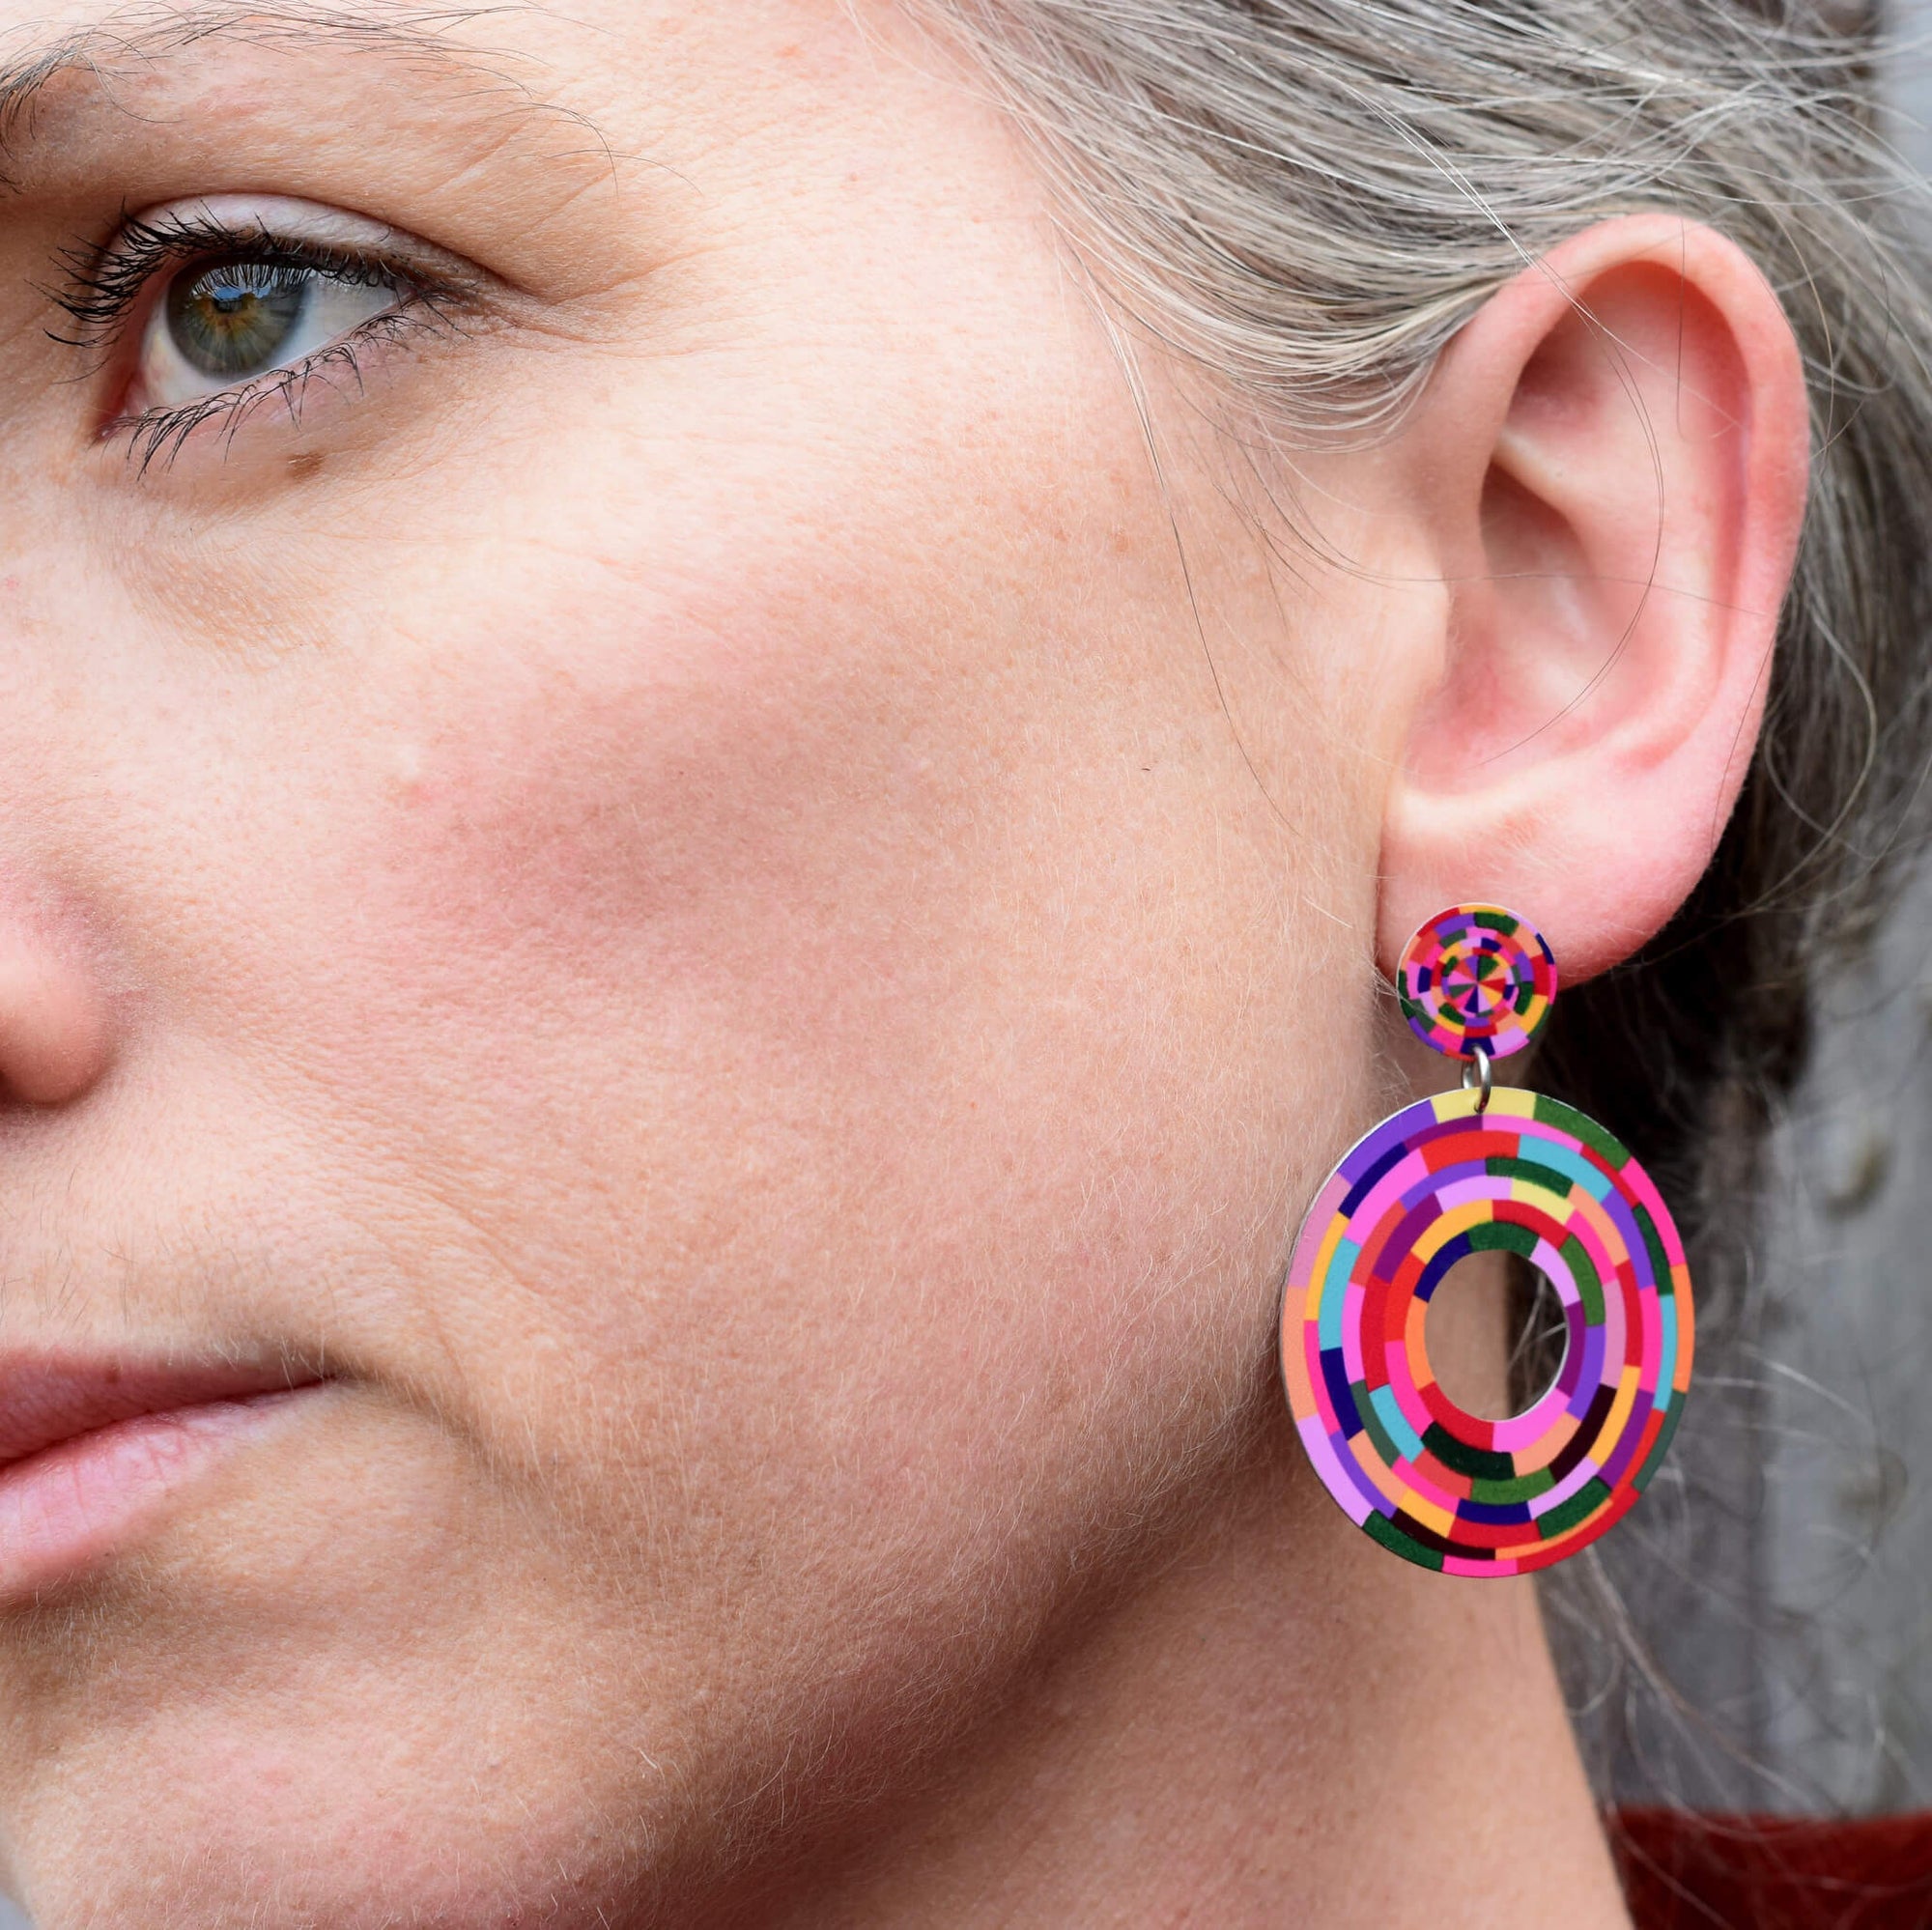 Rosey Posy - earrings - large circle drop studs